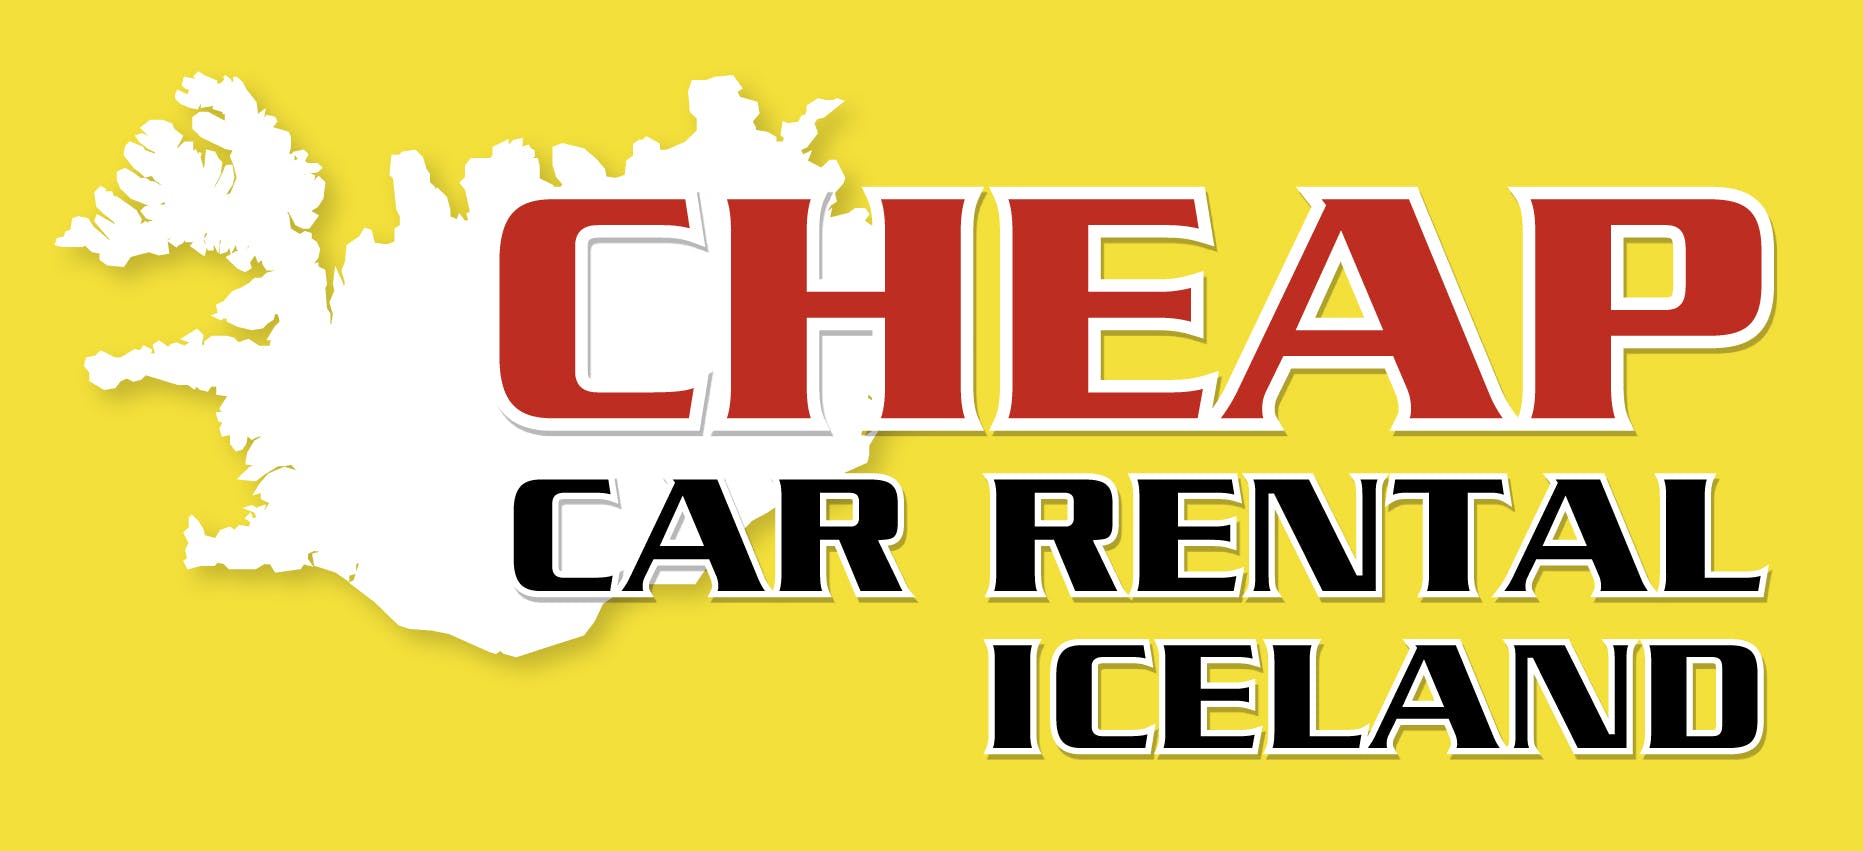 Cheap Car Rental Iceland Logo.jpg